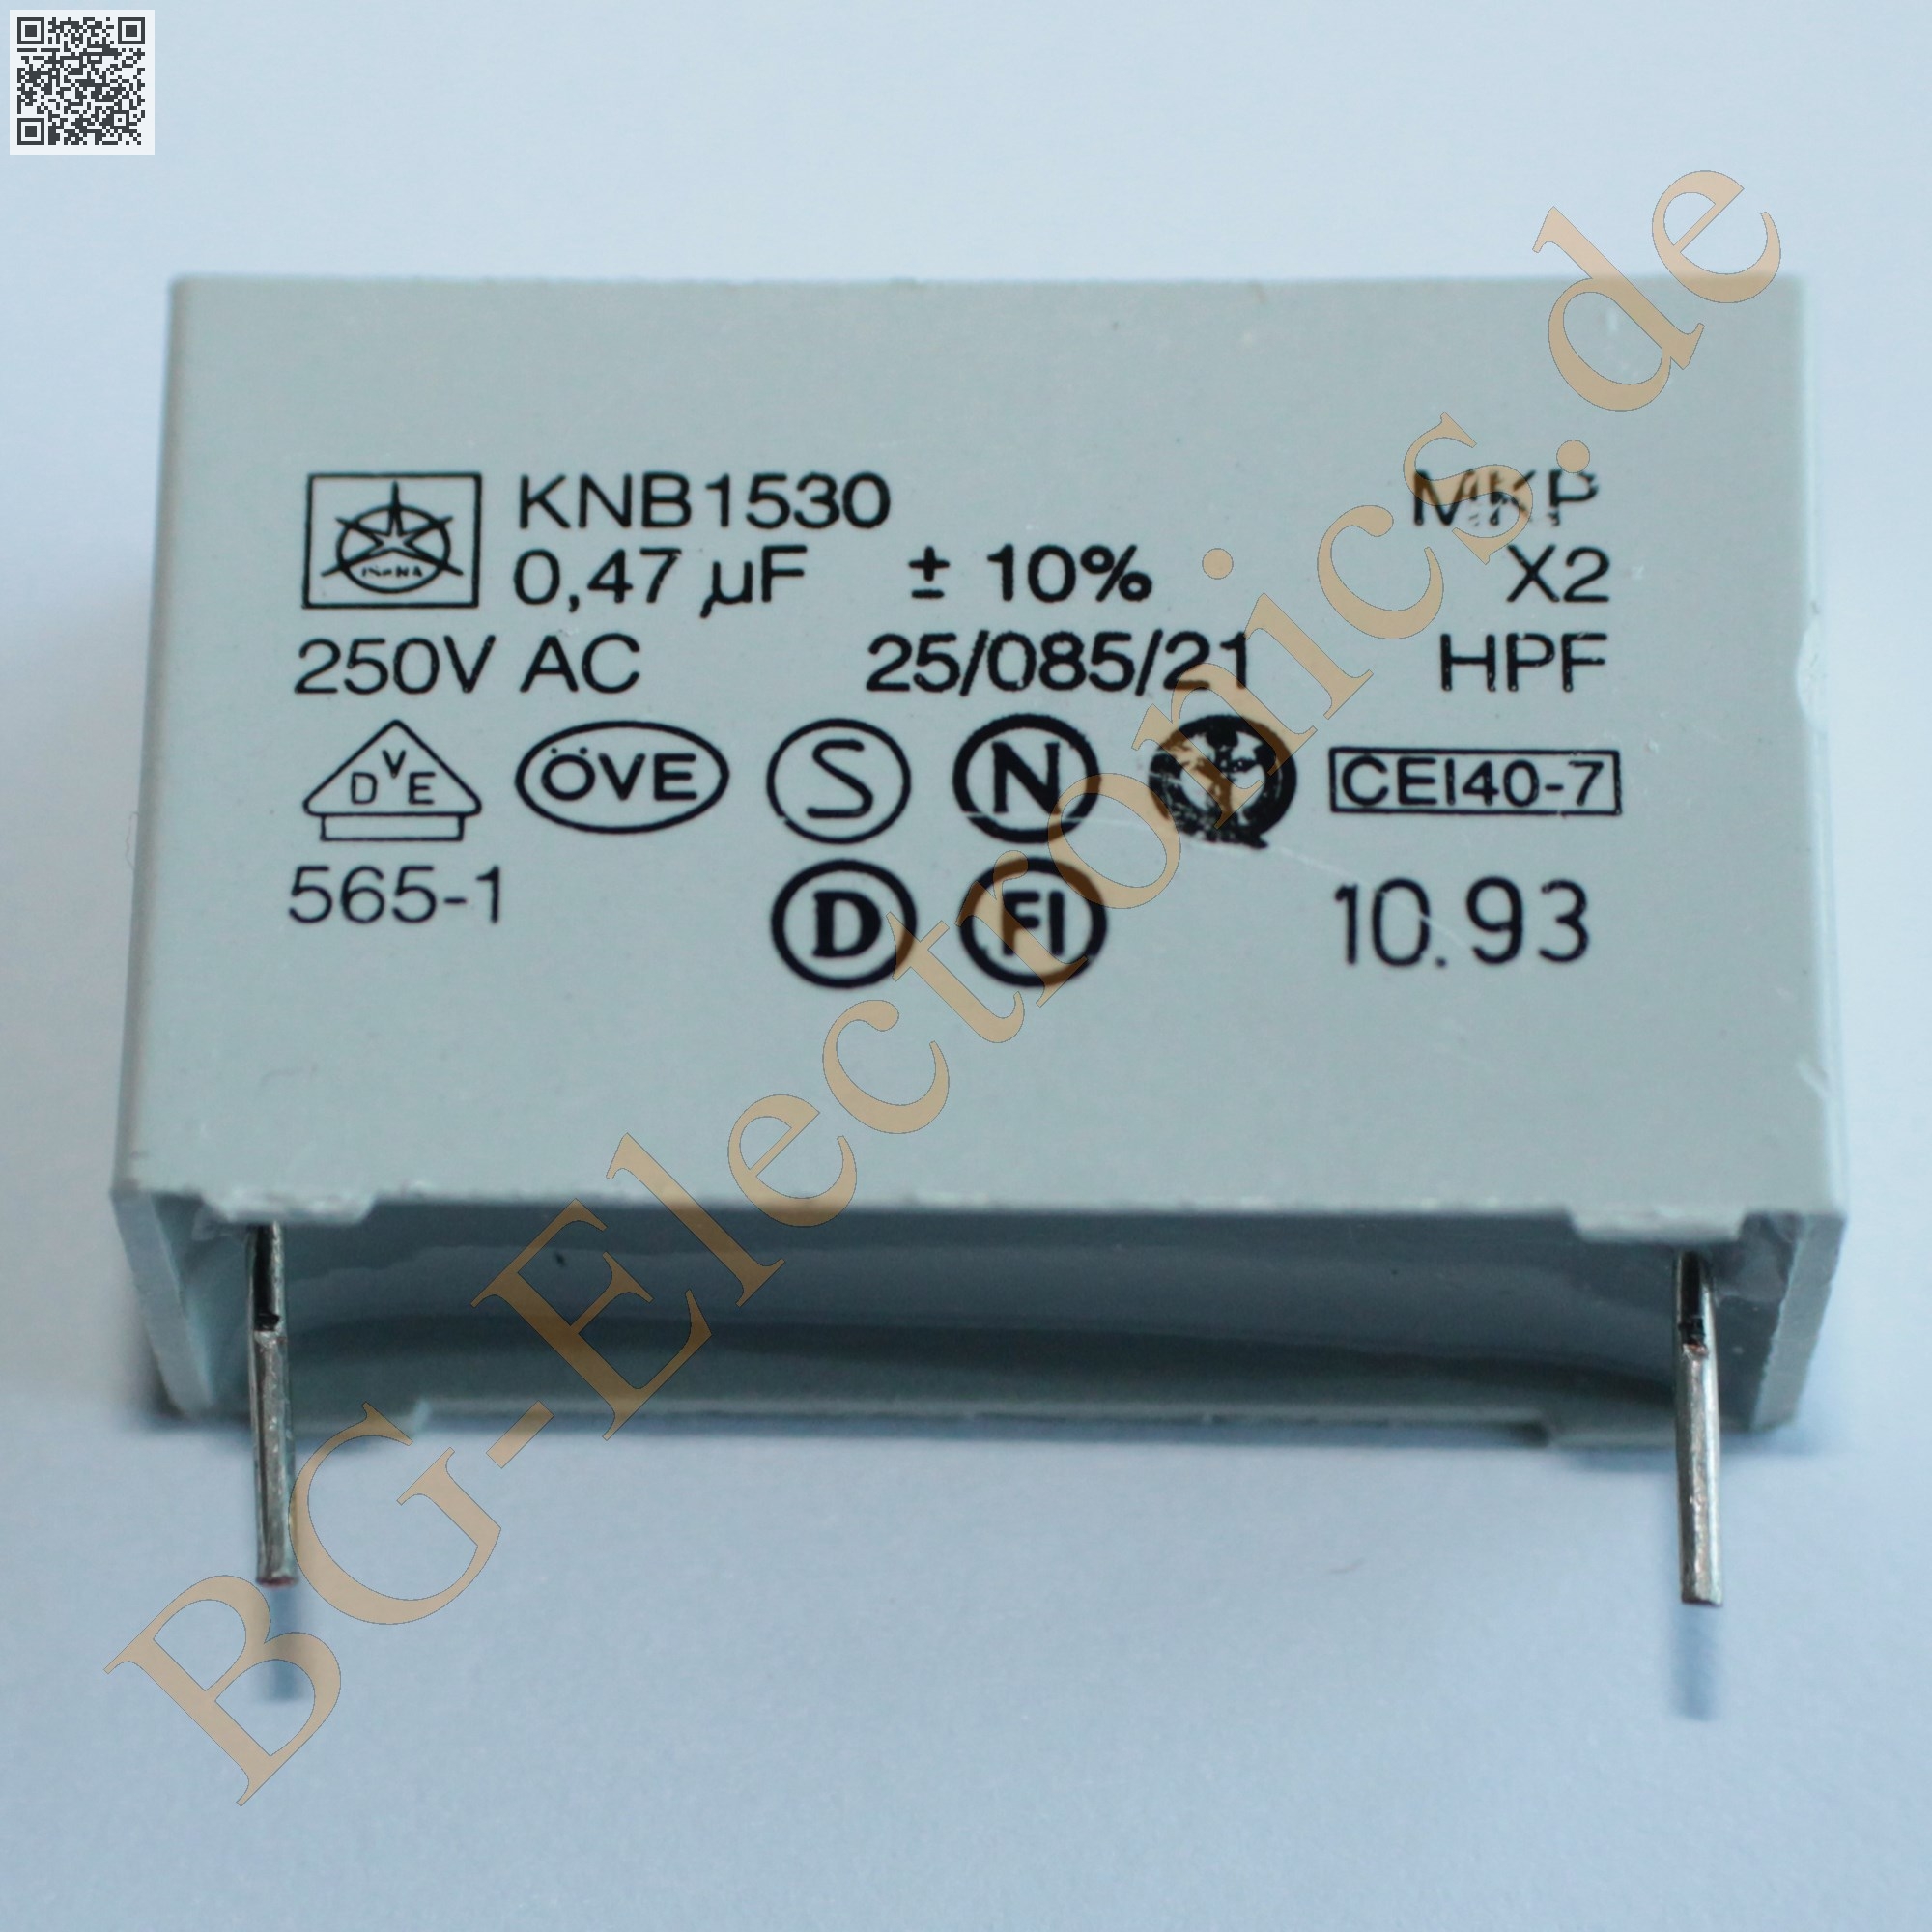 FO-R 470nF / 250V / X2 MKP / RM27,5